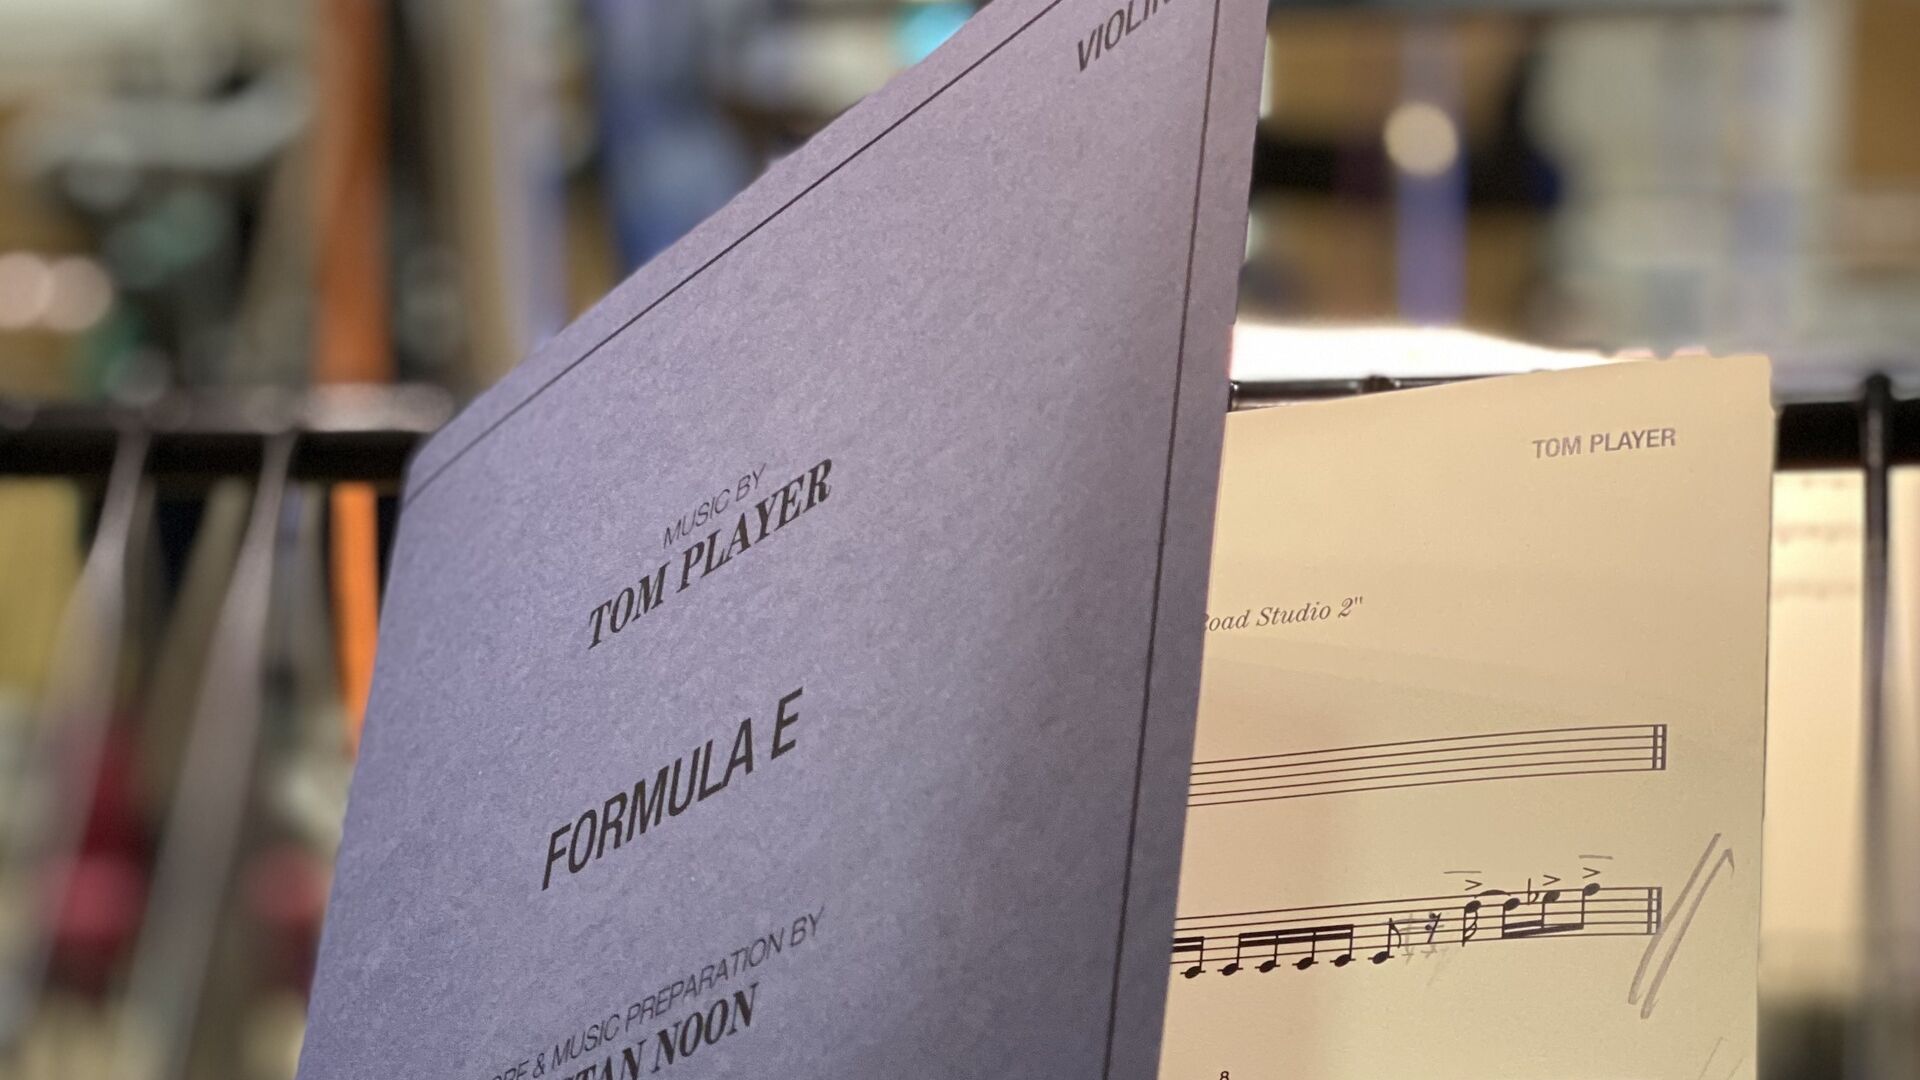 Formula E՝ «Change. Accelerated (The Official Formula E Soundtrack)» Թոմ Փլեյերի կողմից, որը պարունակում է յոթ թրեք. 55 հոգանոց նվագախումբ Abbey Road Studios-ում